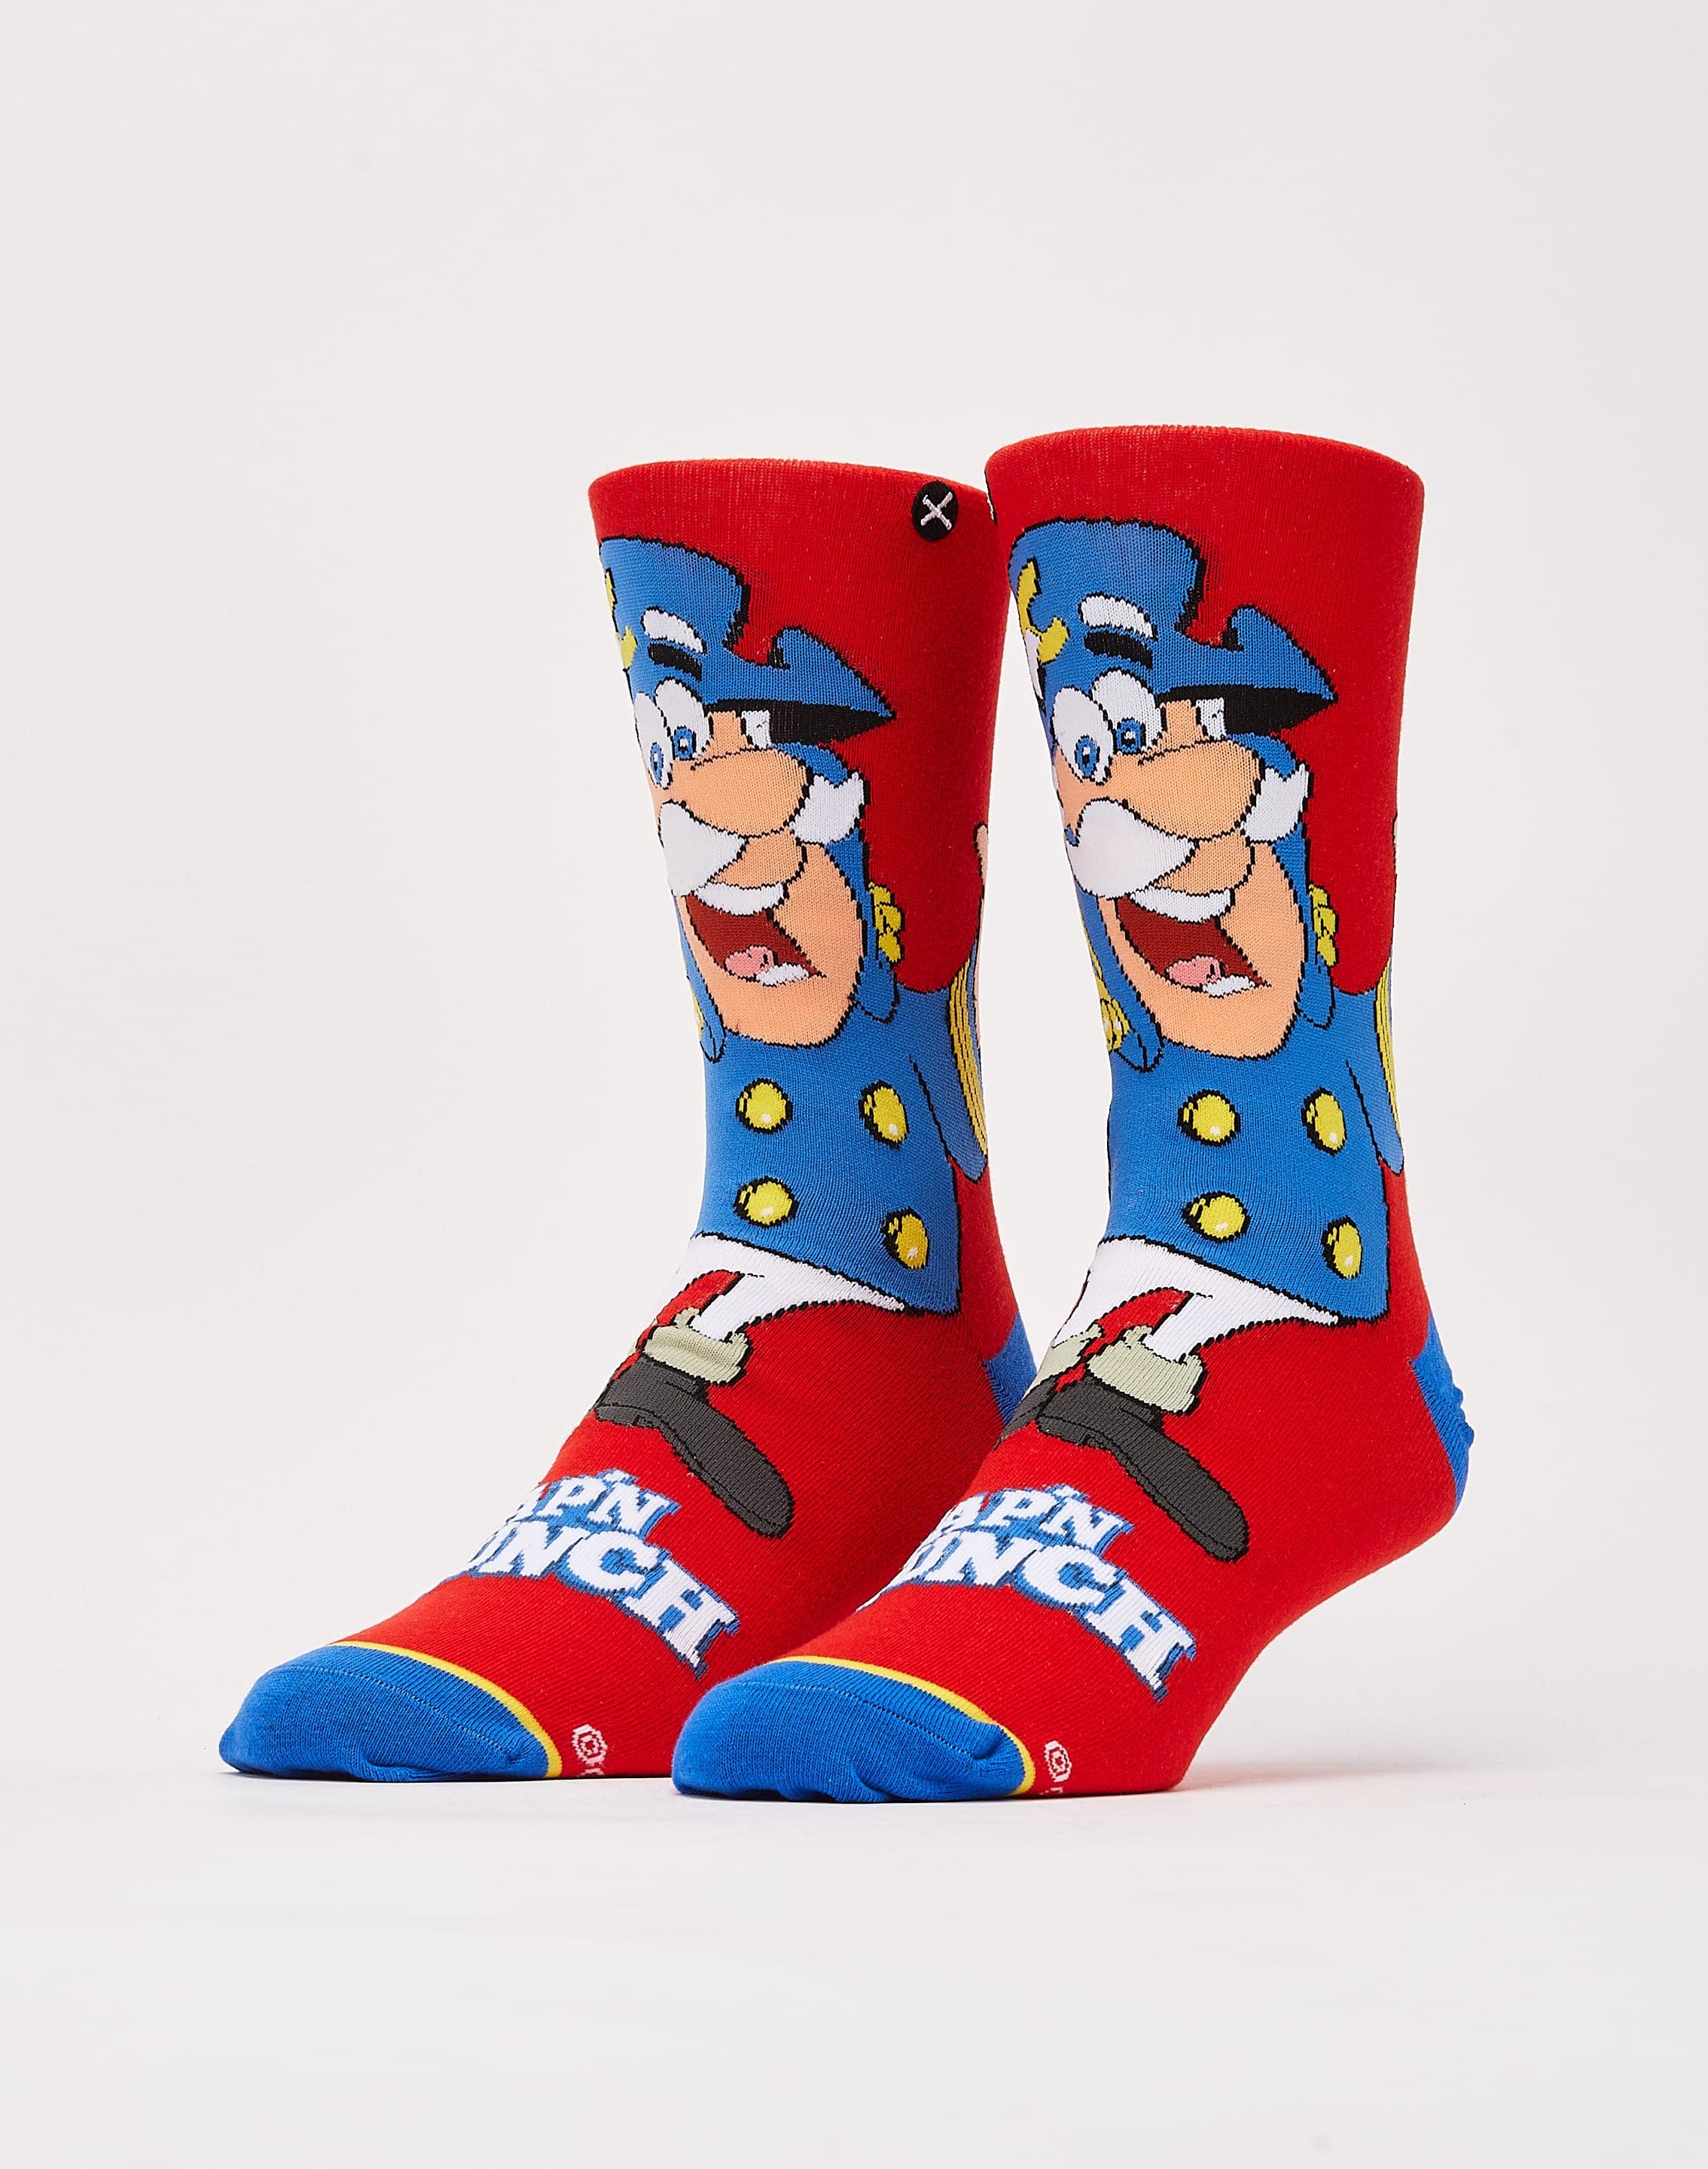 Odd Sox Cap'n Crunch Crew Socks